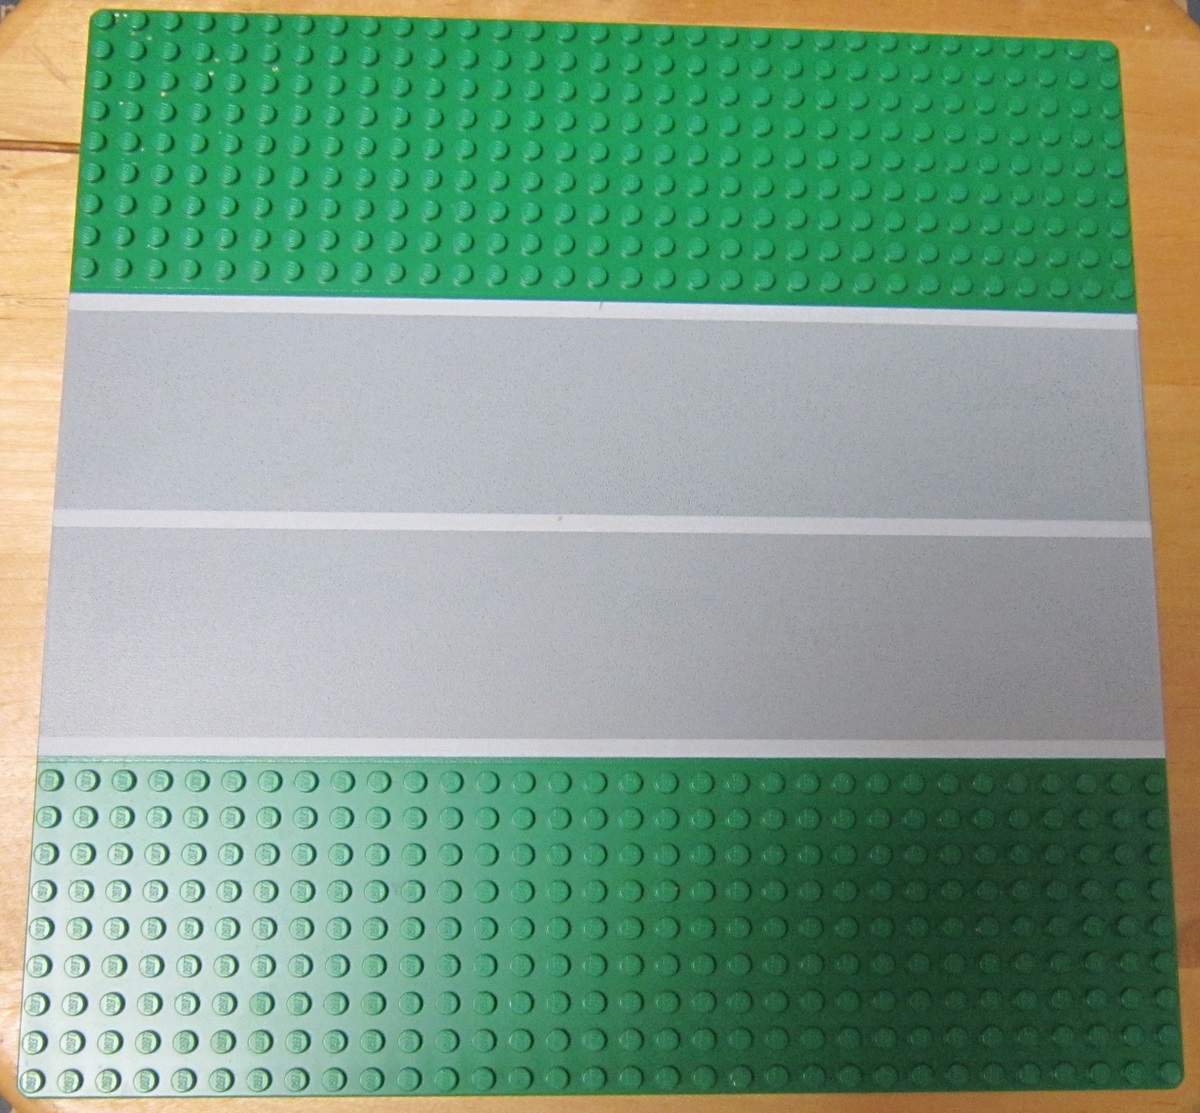 0080 Lego vejbane